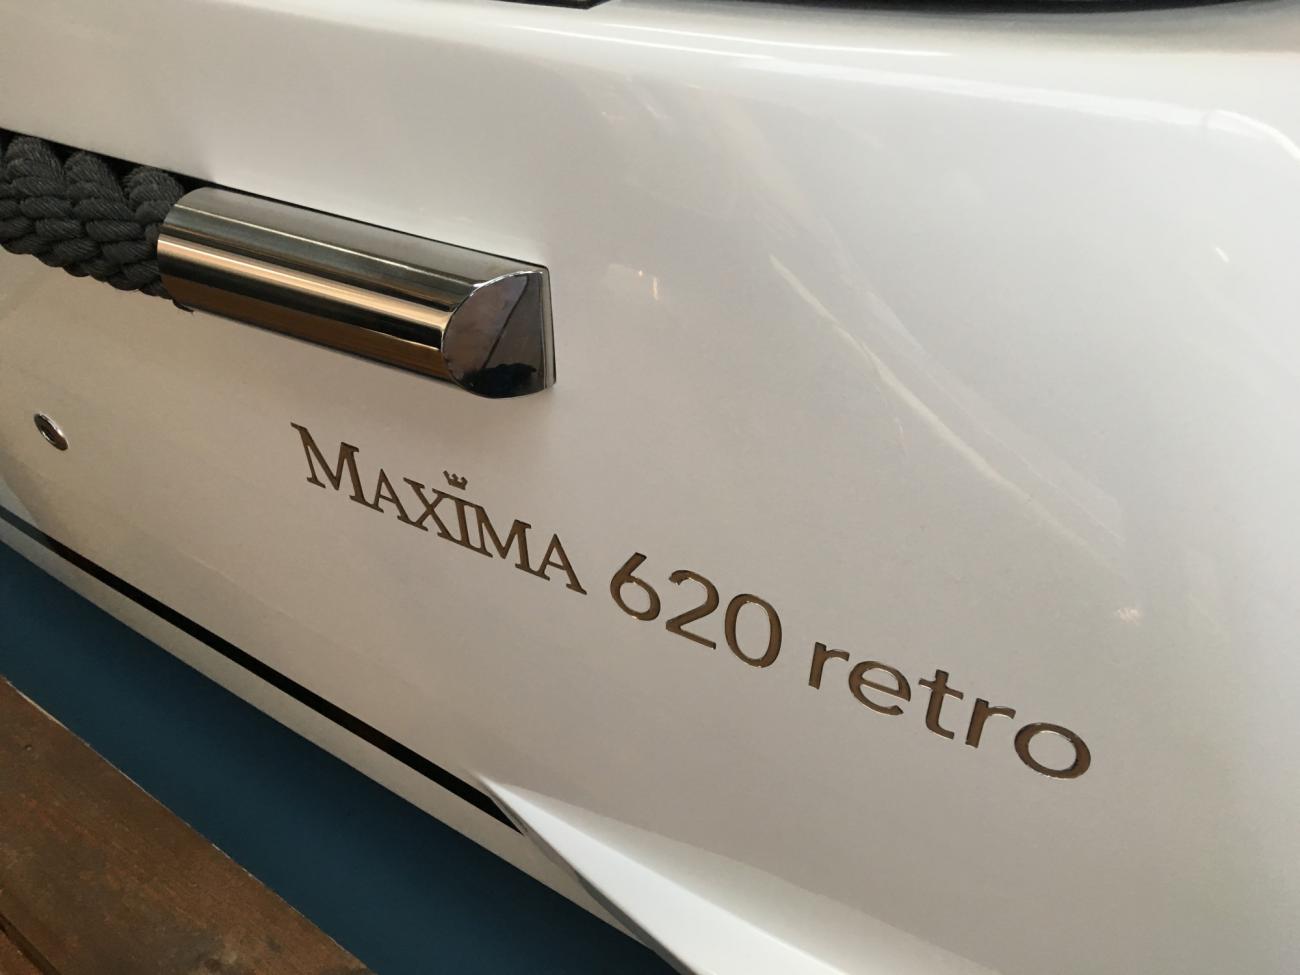 Maxima 620 MC Elektrisch